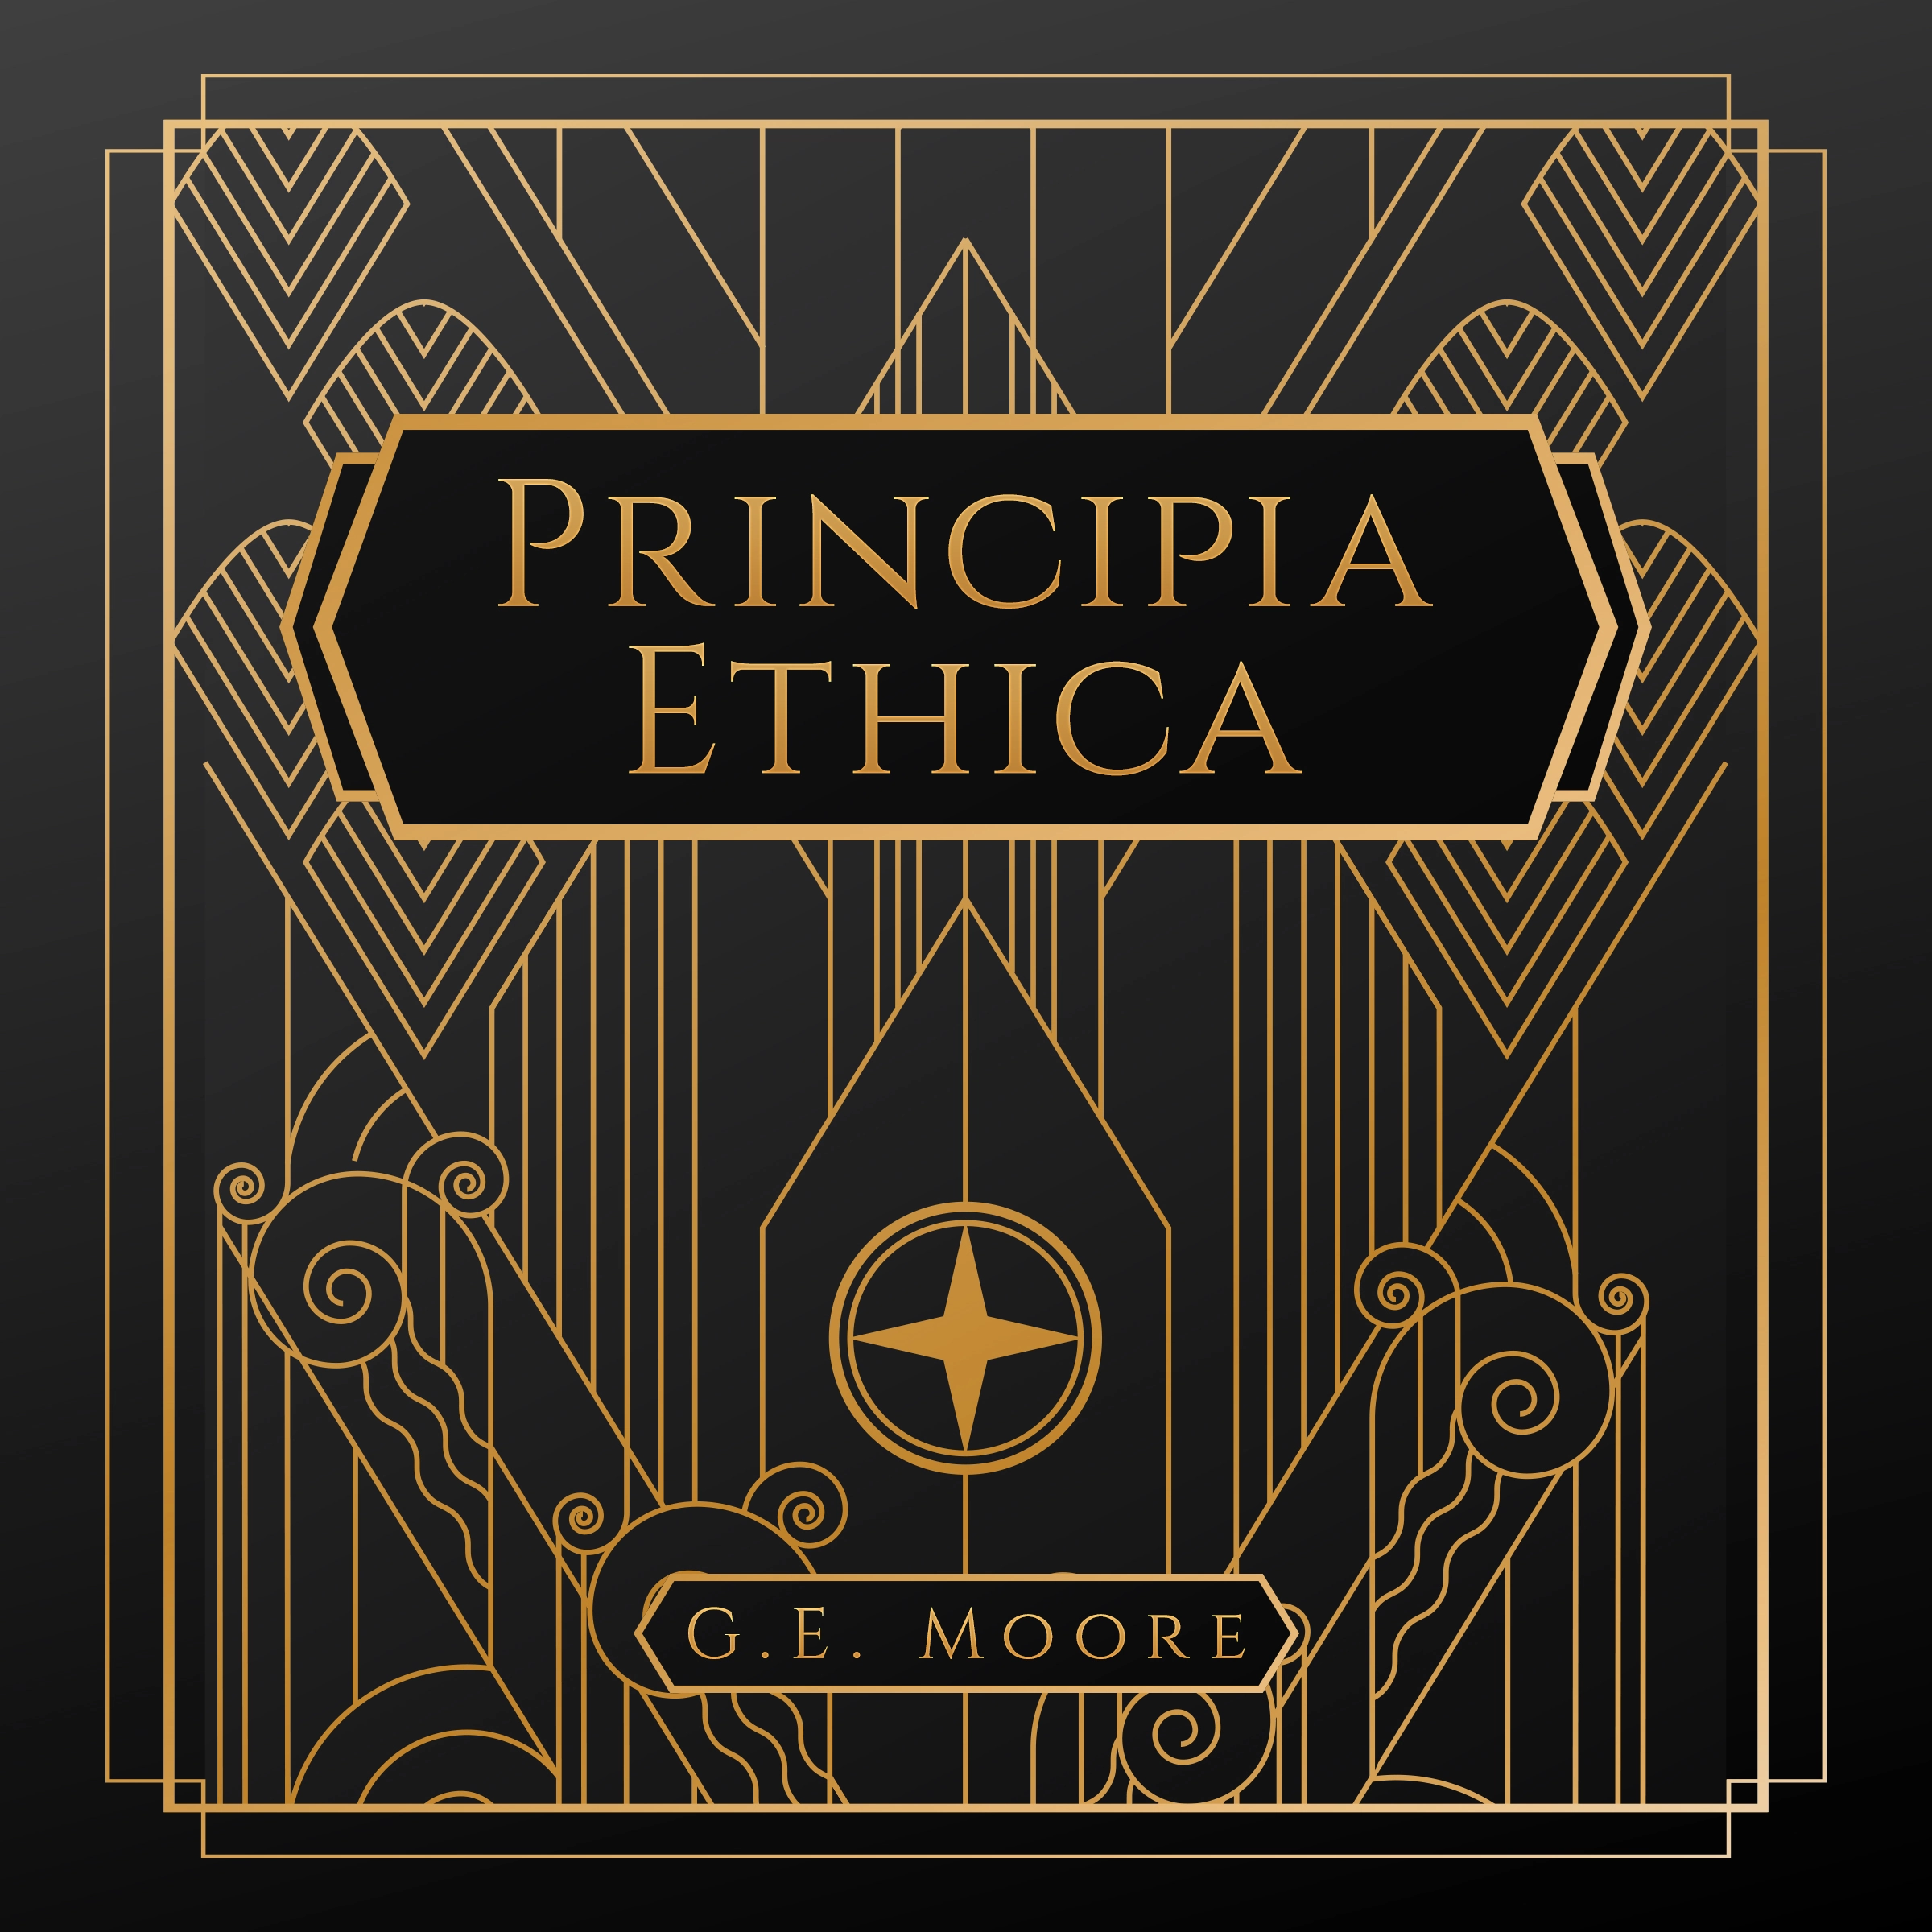 Principia Ethica Audiobook by G.E. Moore